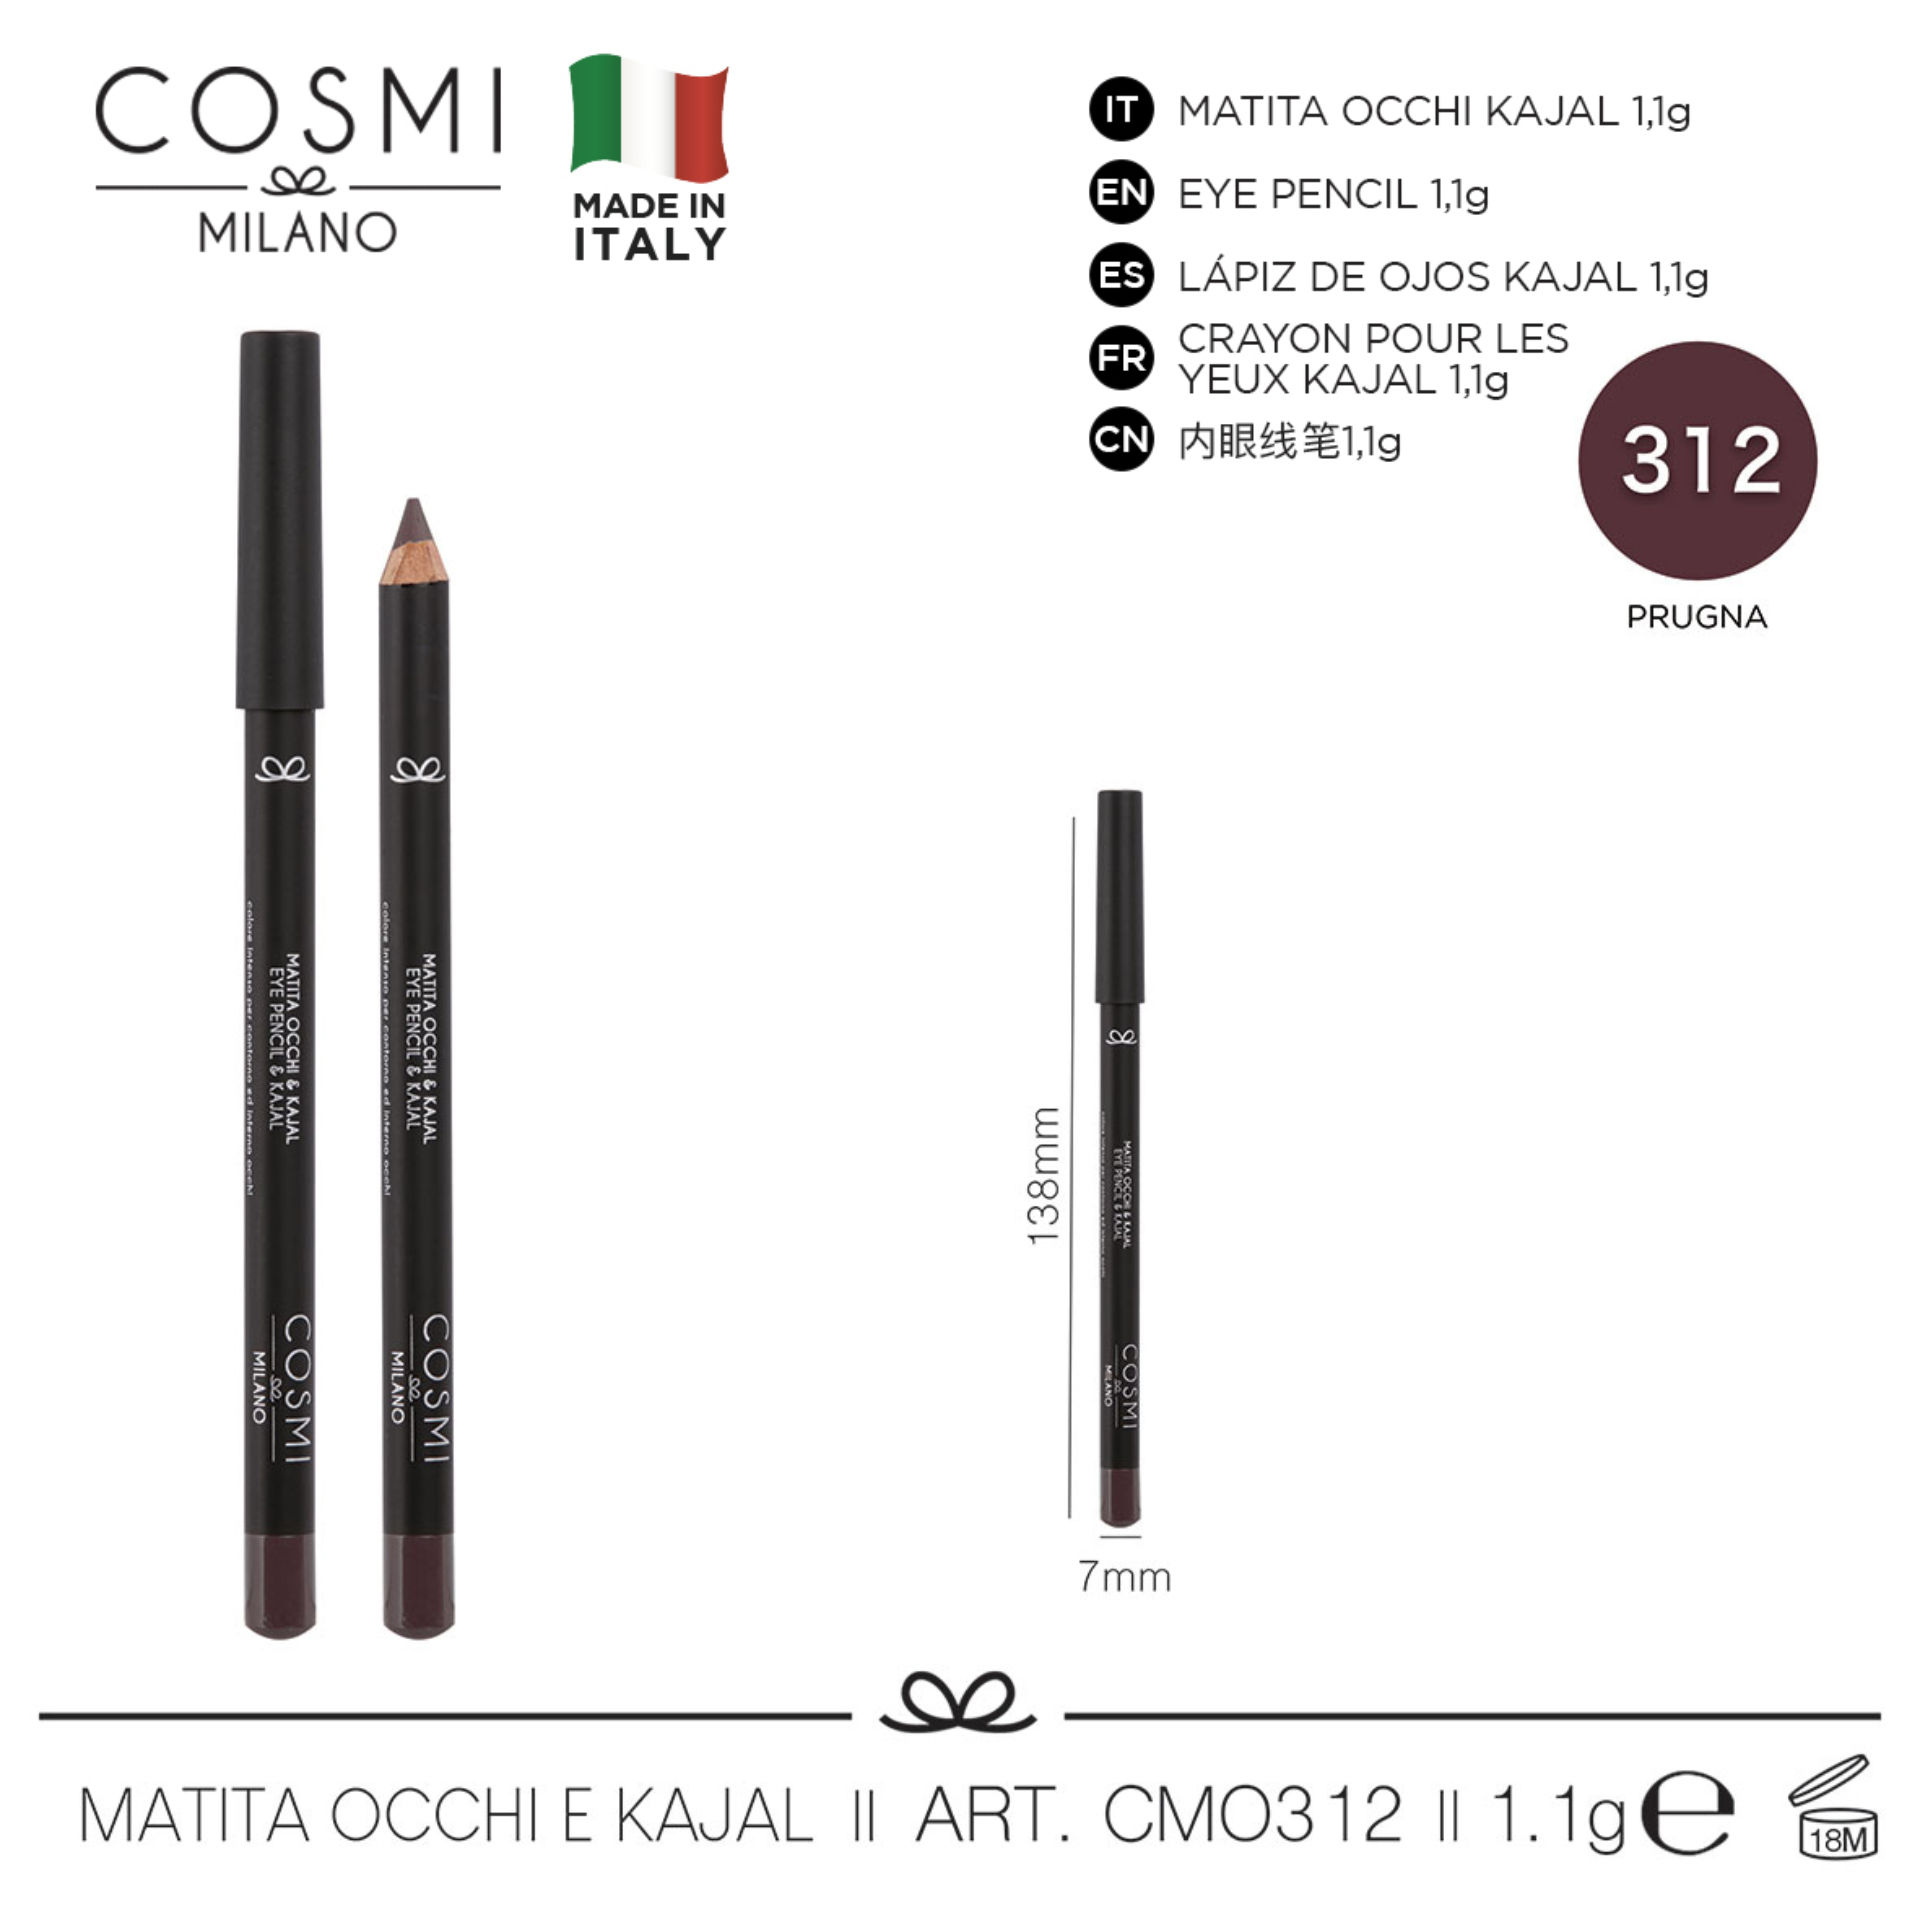 COSMI MATITA OCCHI AND KAJAL N.312Cosmi